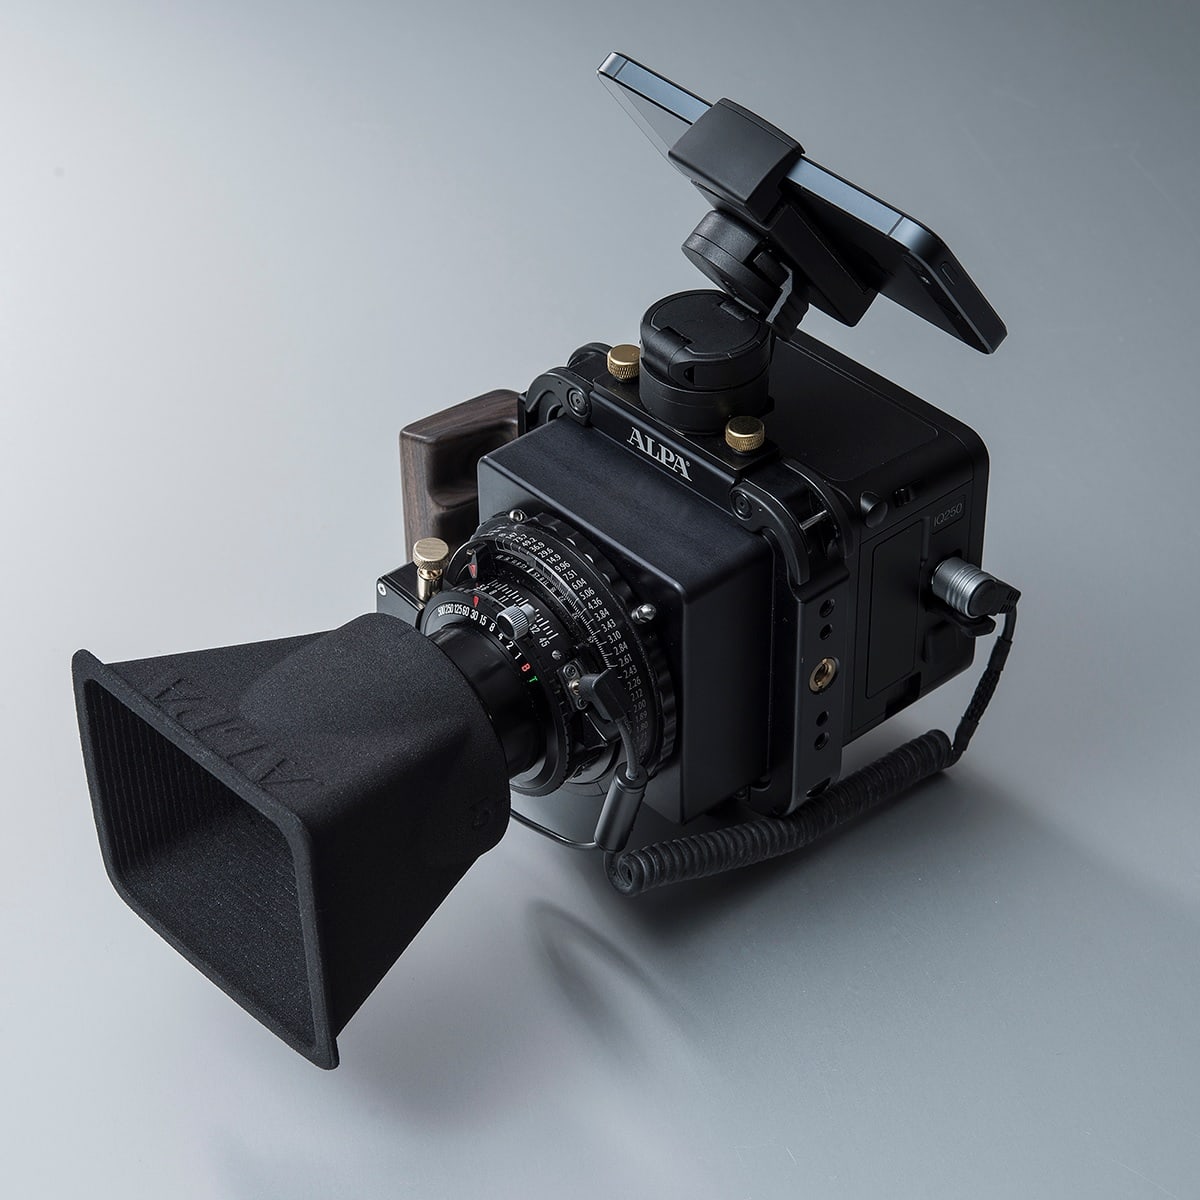 Camera with 3D printed lens shade